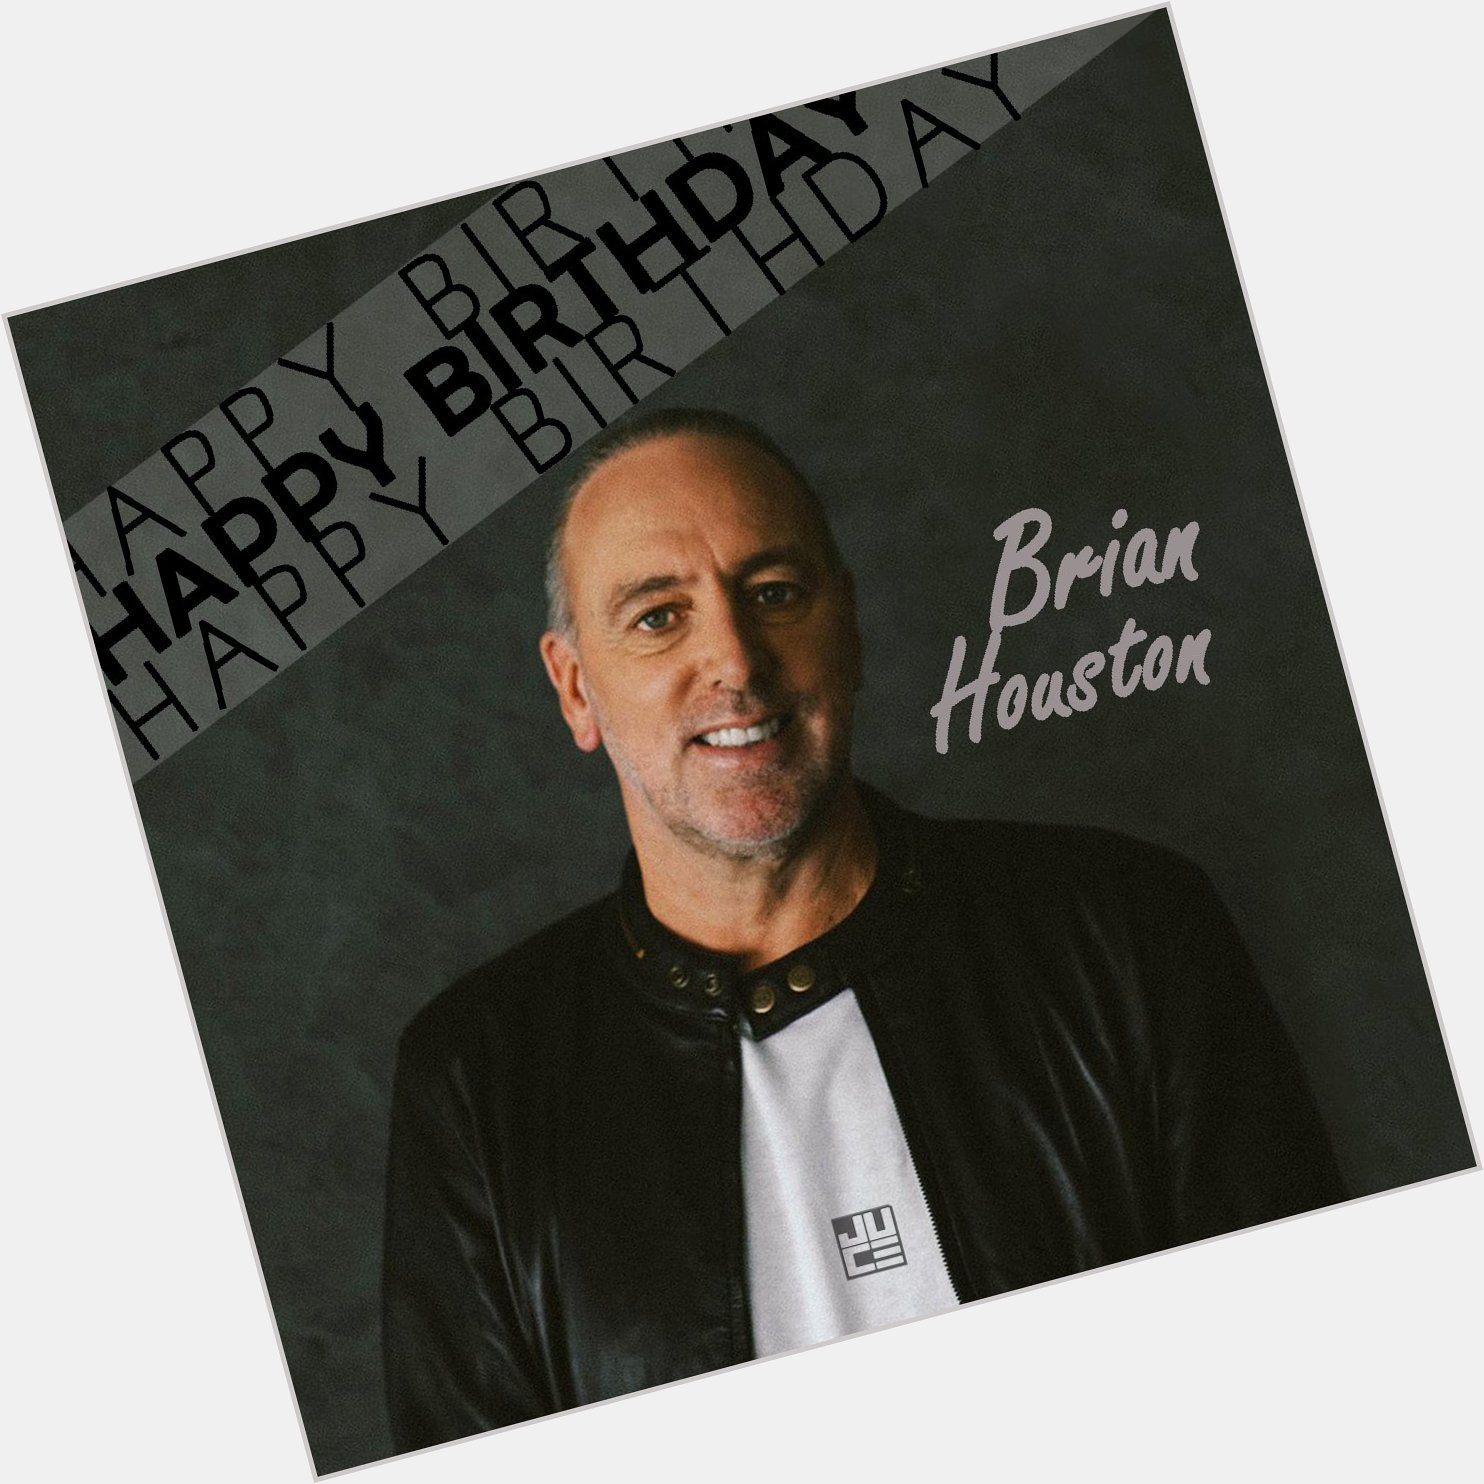 Happy Birthday to this man of God, Brian Houston! 